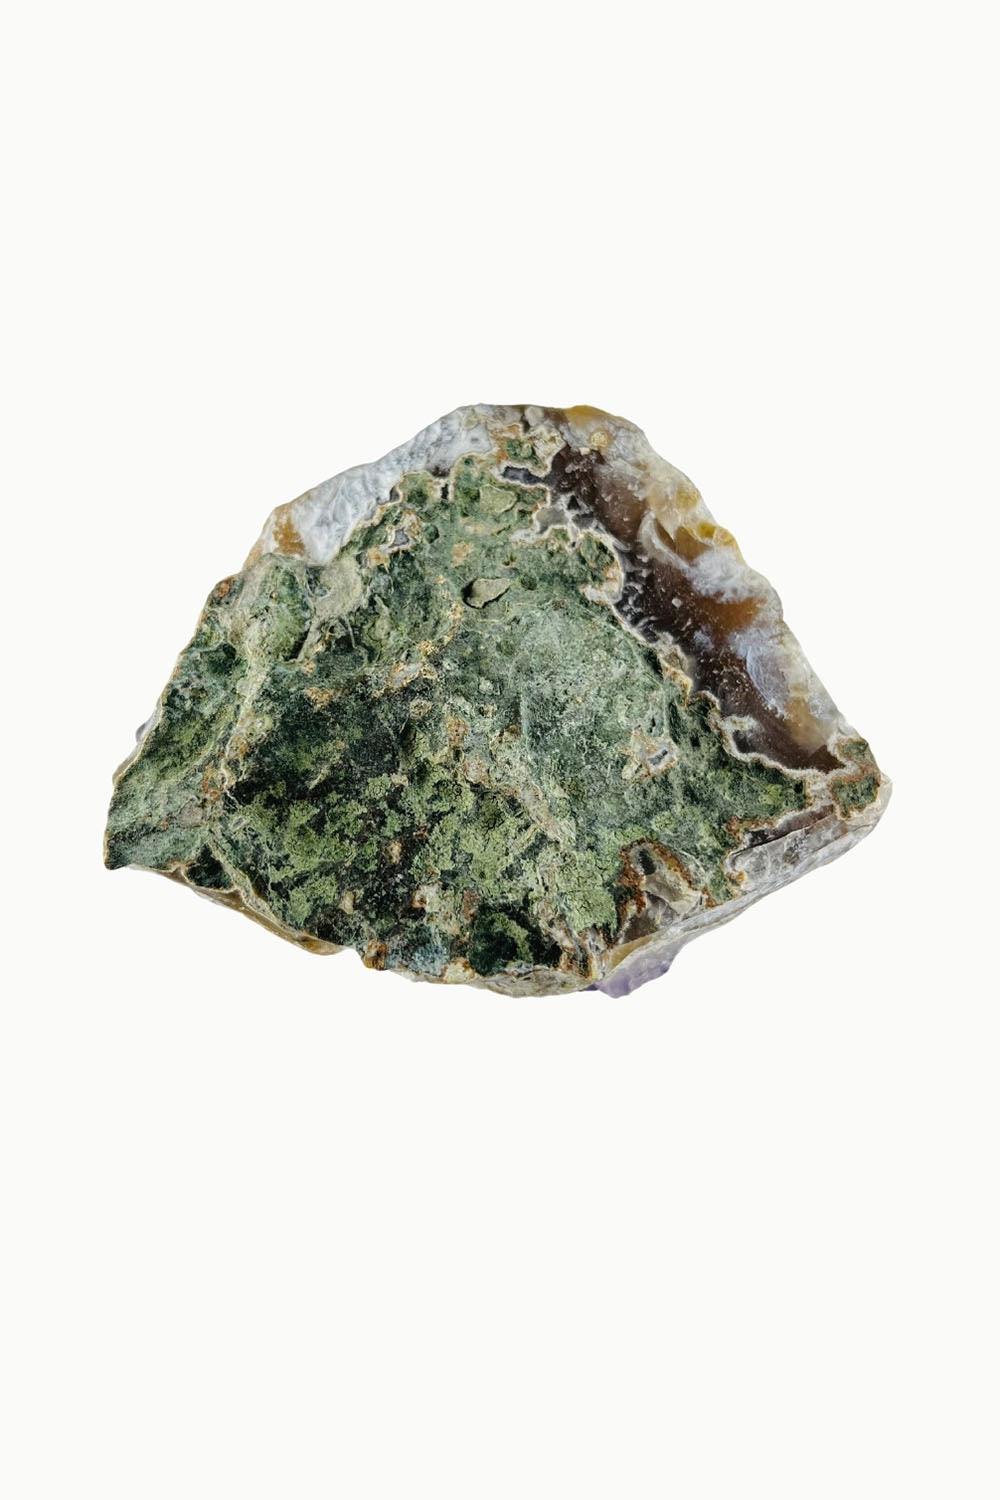 Amethyst Geode #6